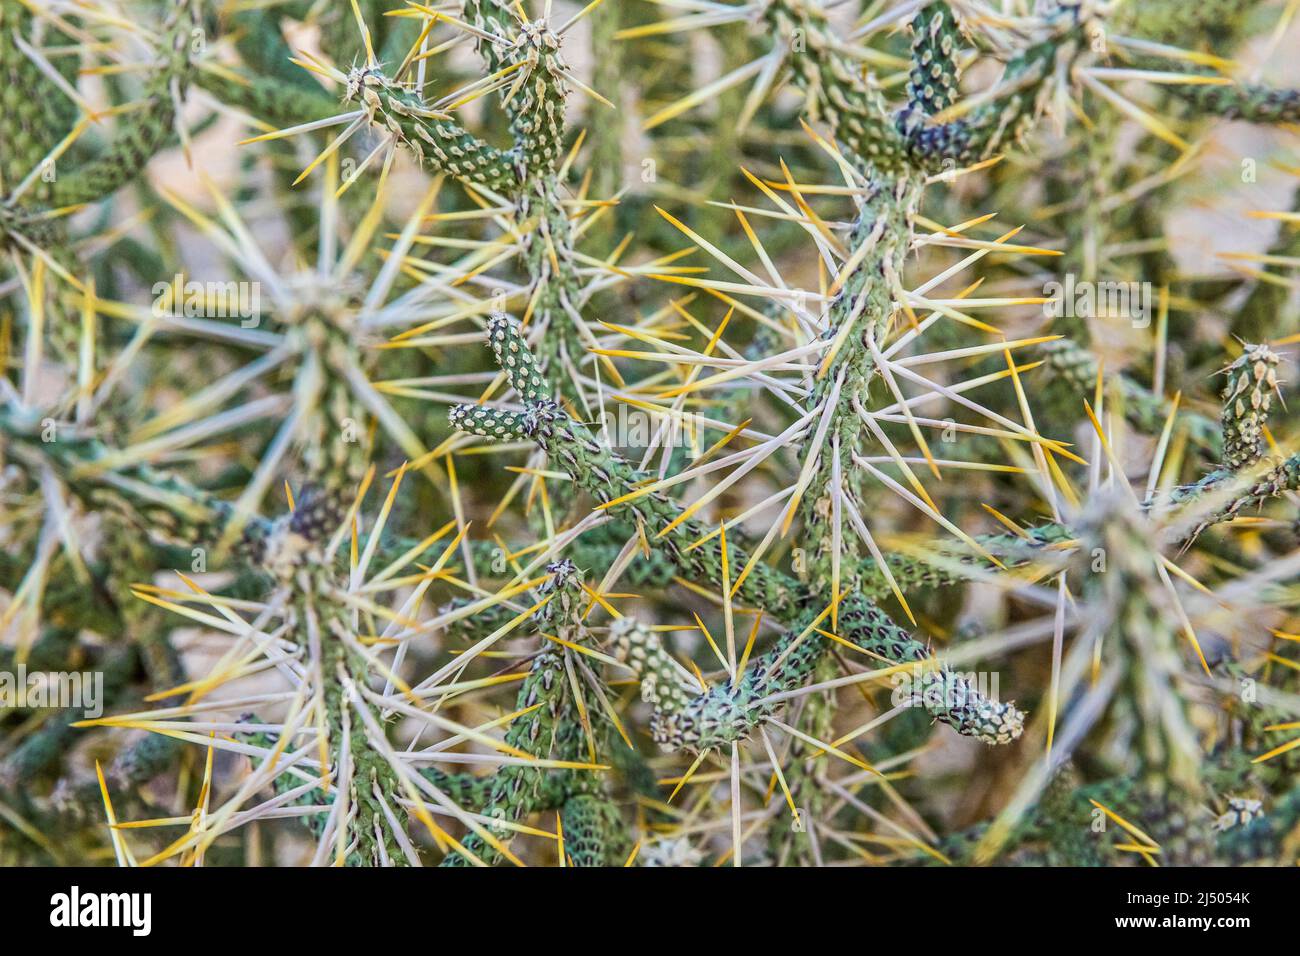 Closeup of a Pencil Cholla Cactus in Joshua Tree National Park, California, USA. Stock Photo